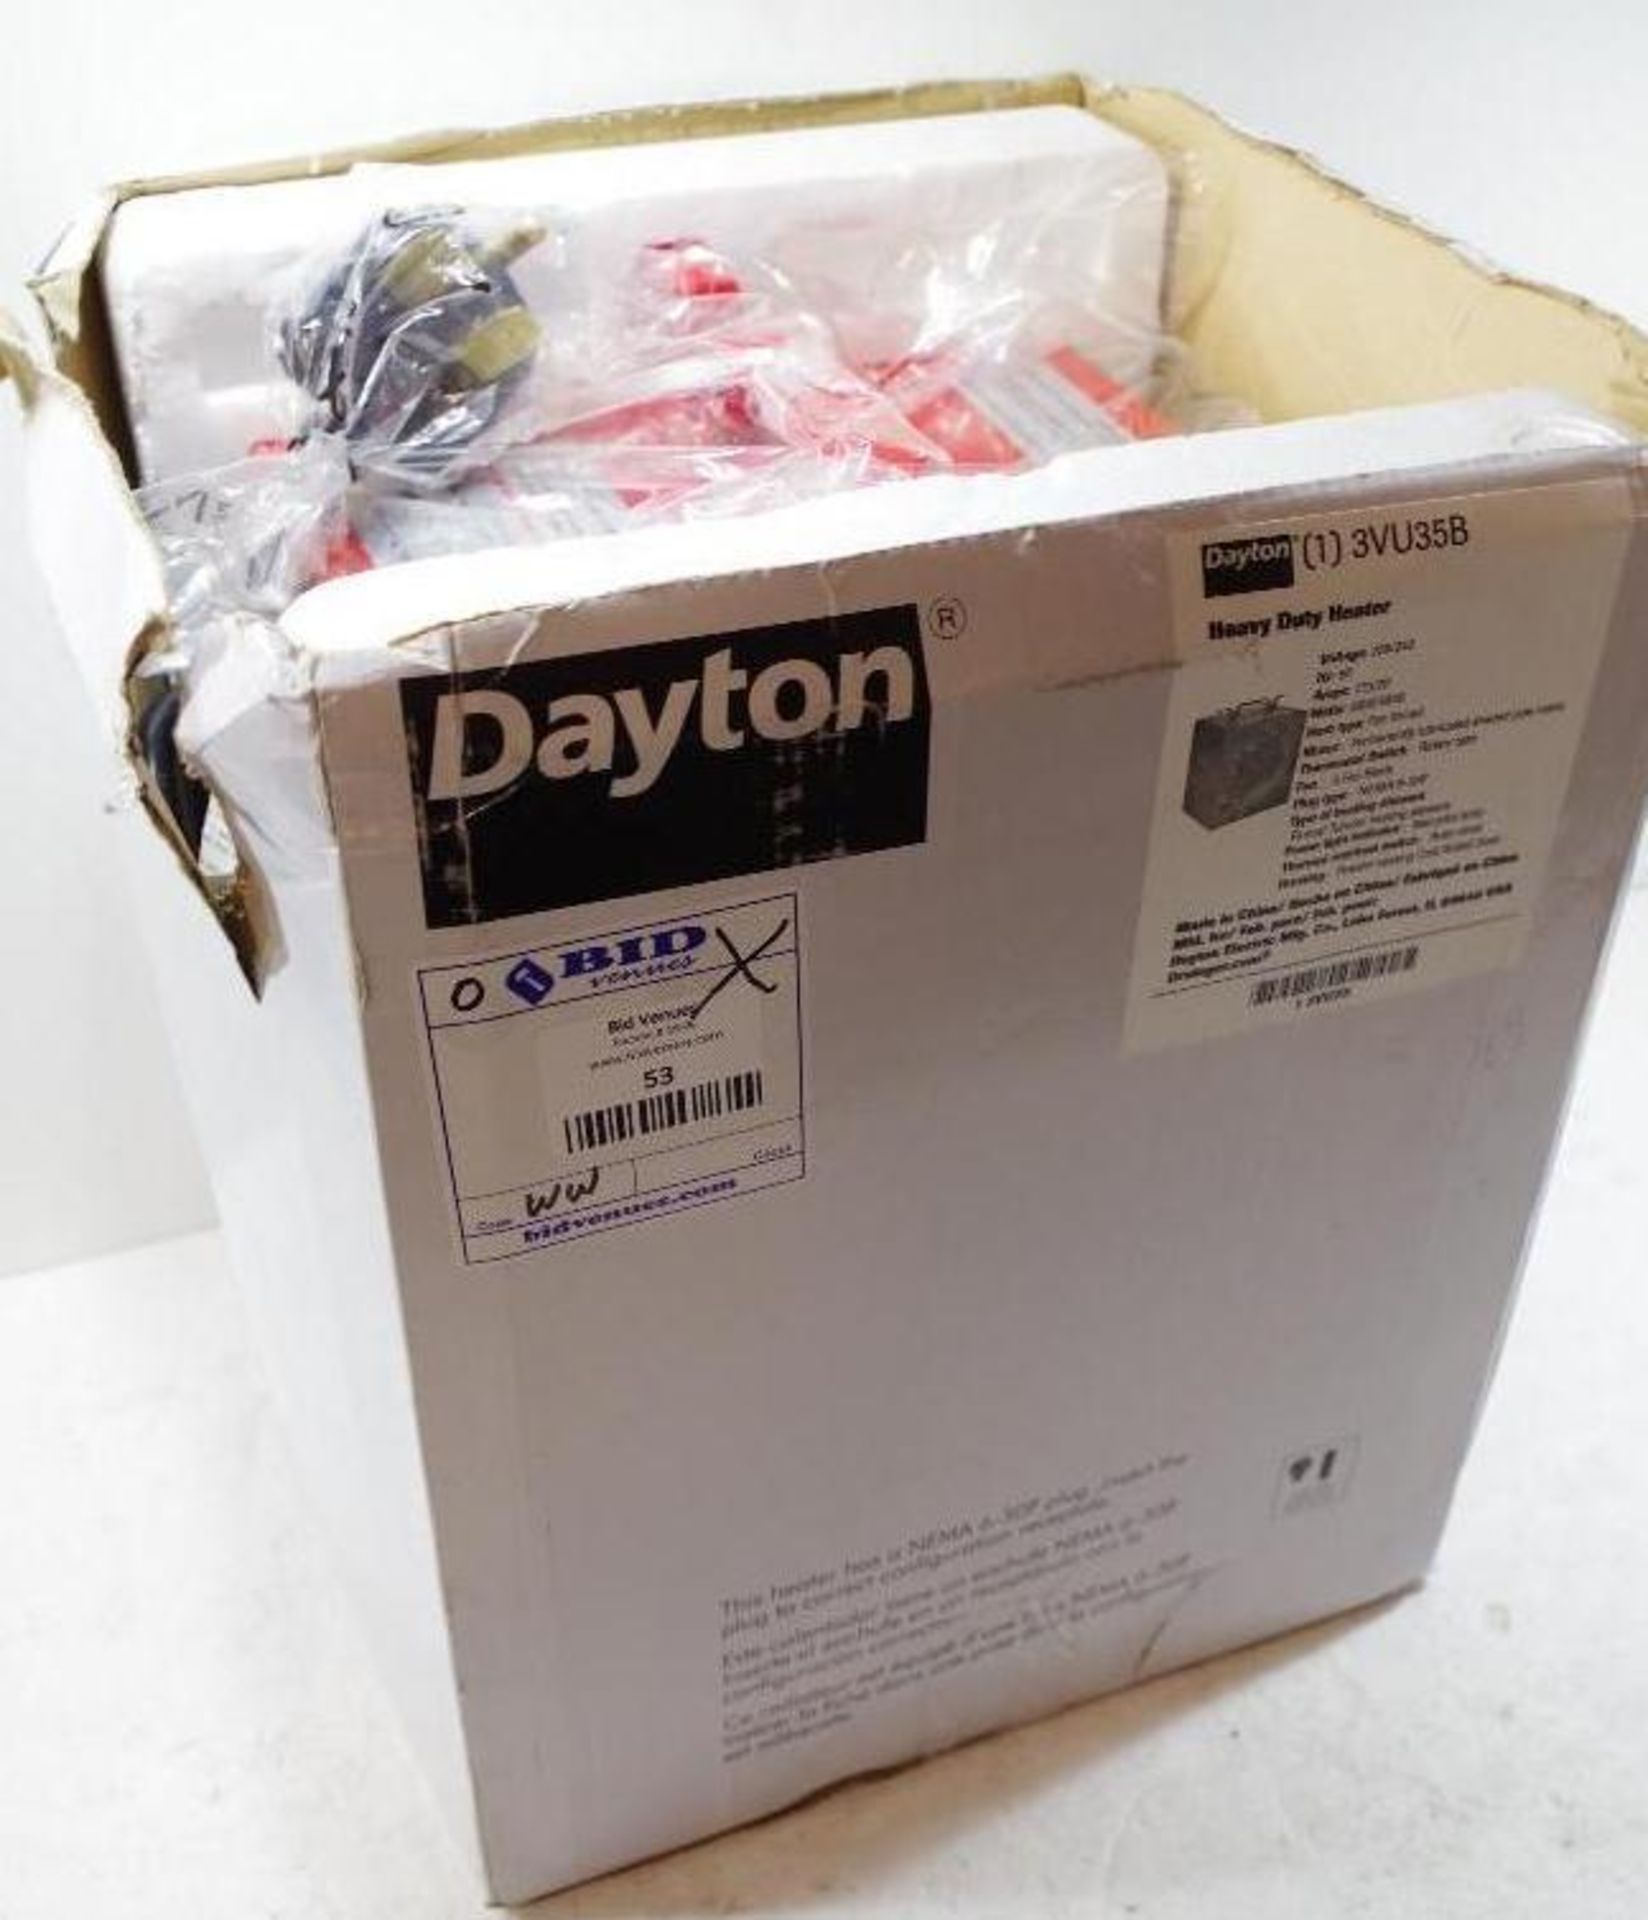 DAYTON Heavy Duty Heater M/N 3VU35B